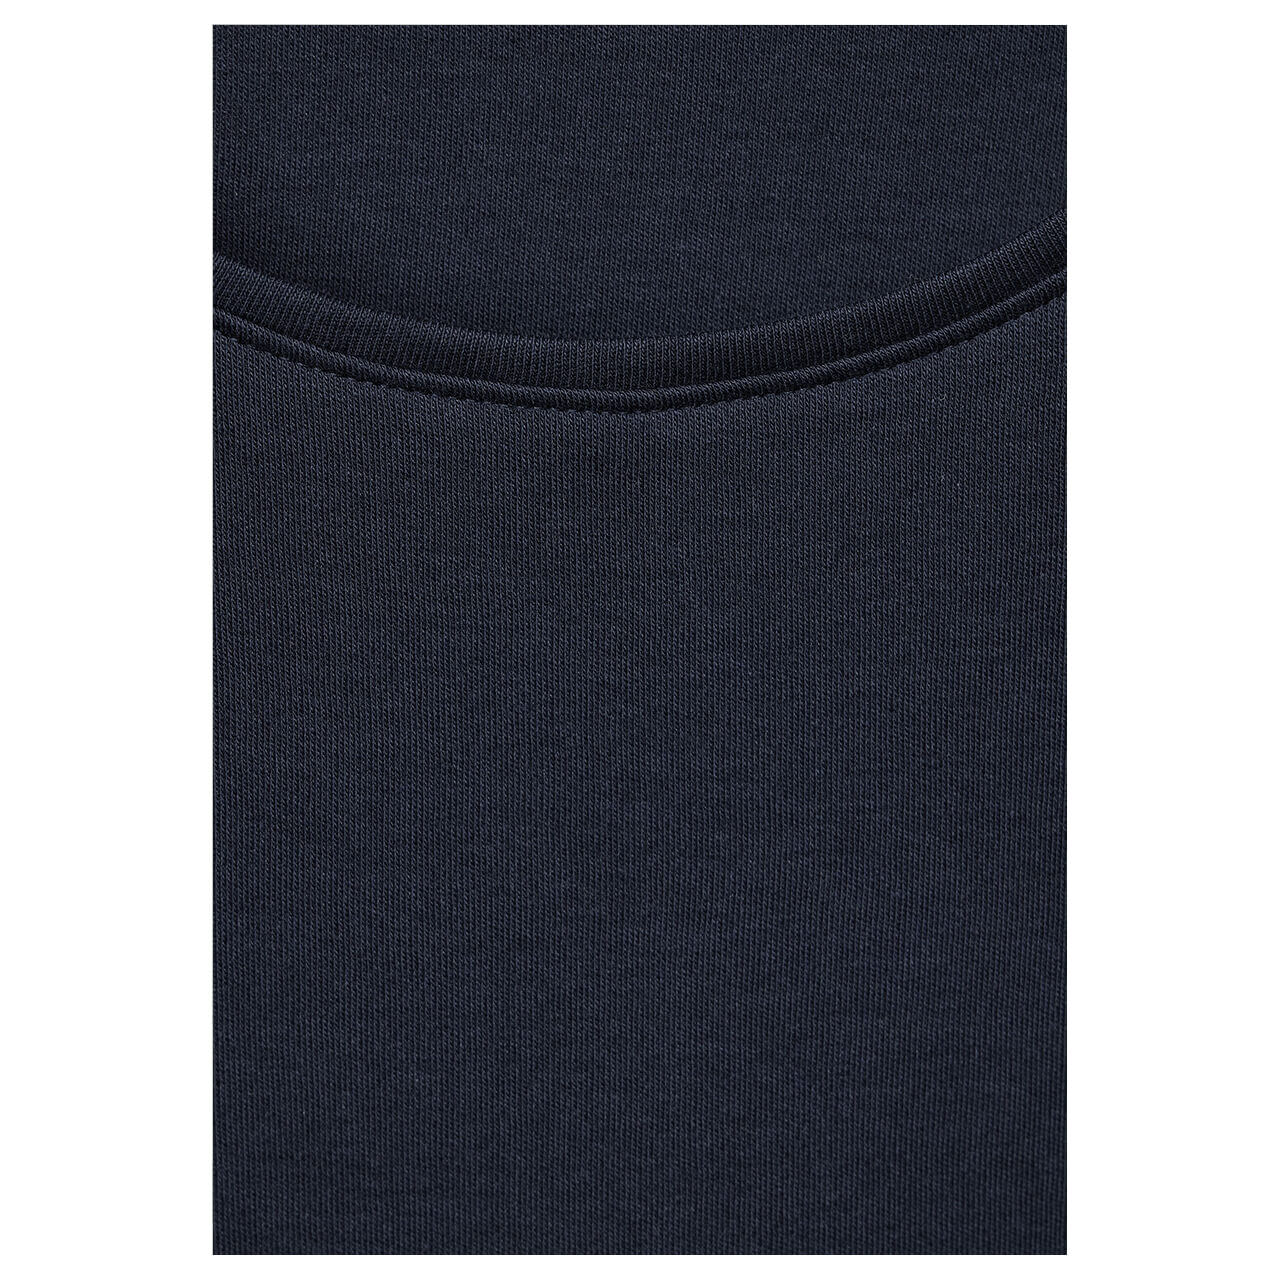 Cecil Damen T-Shirt Lena universal blue